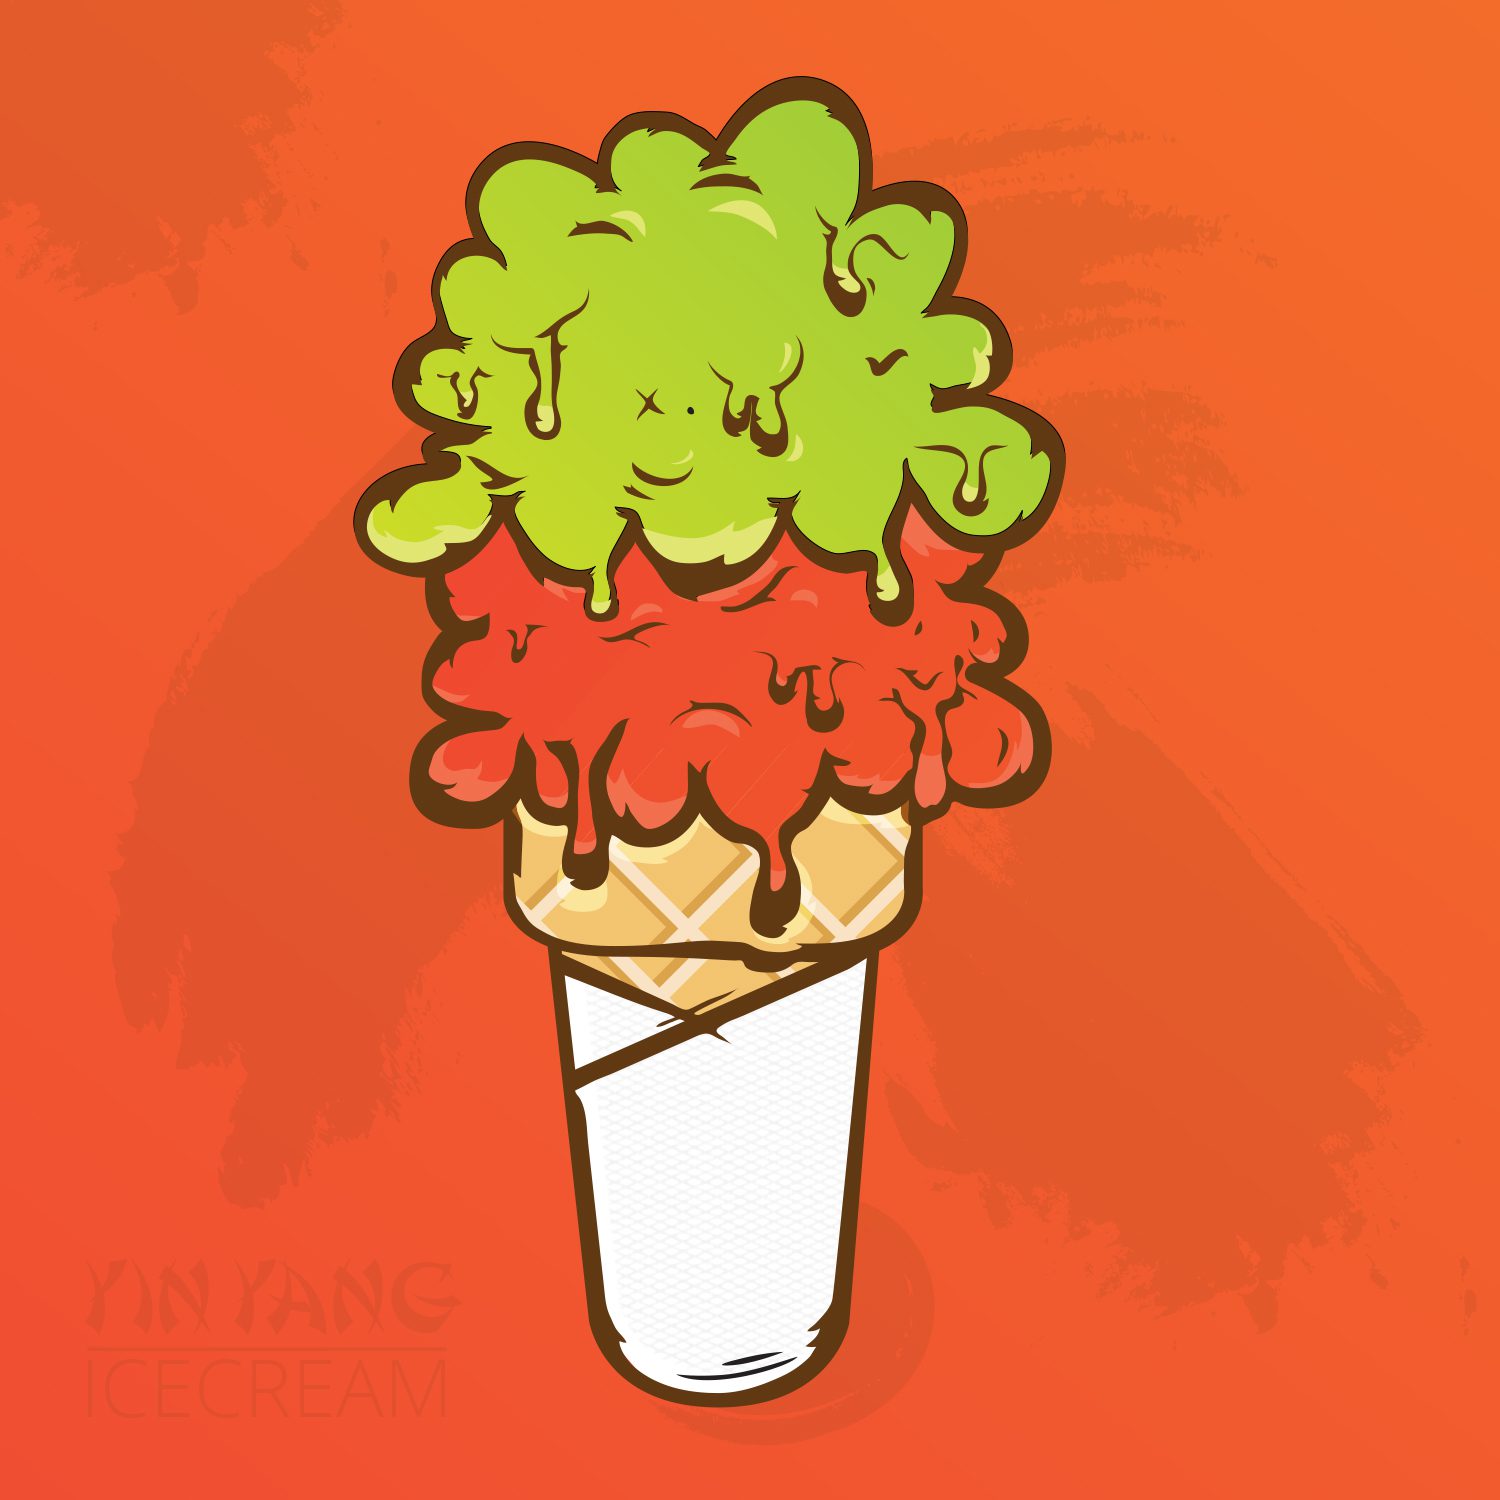 Ying Yang Ice cream cone illustration